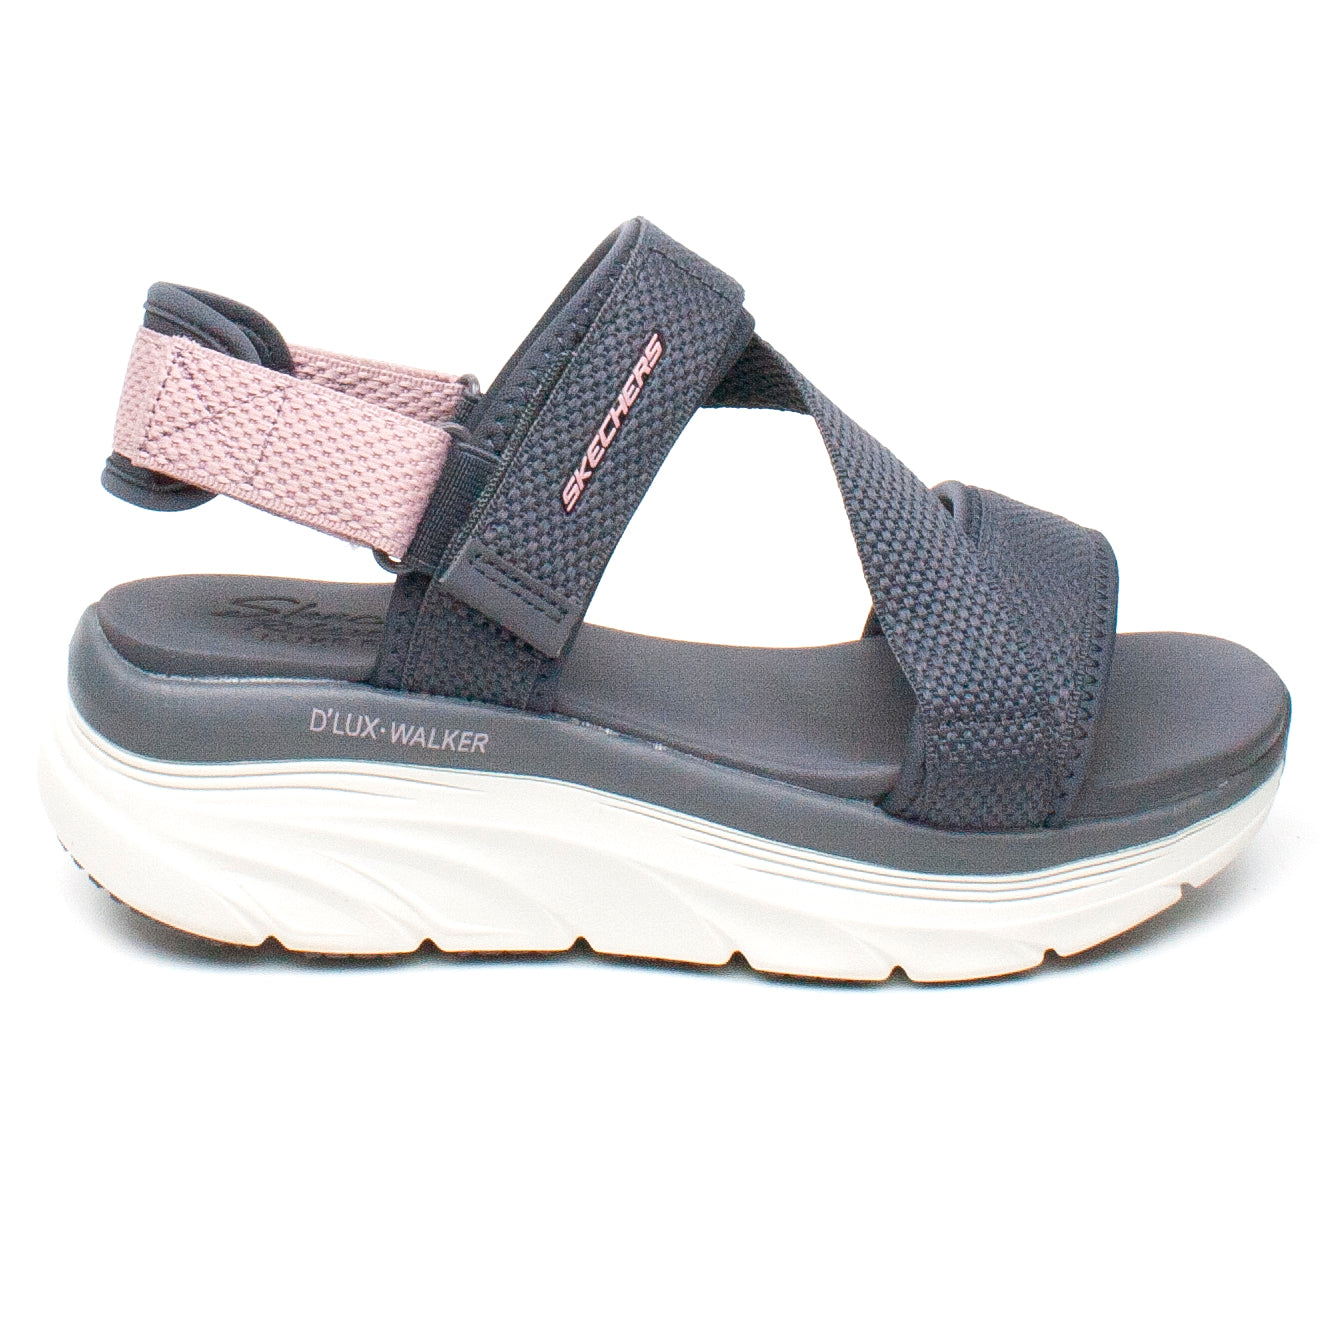 Skechers sandale dama 119302 gri ID3001-GRI